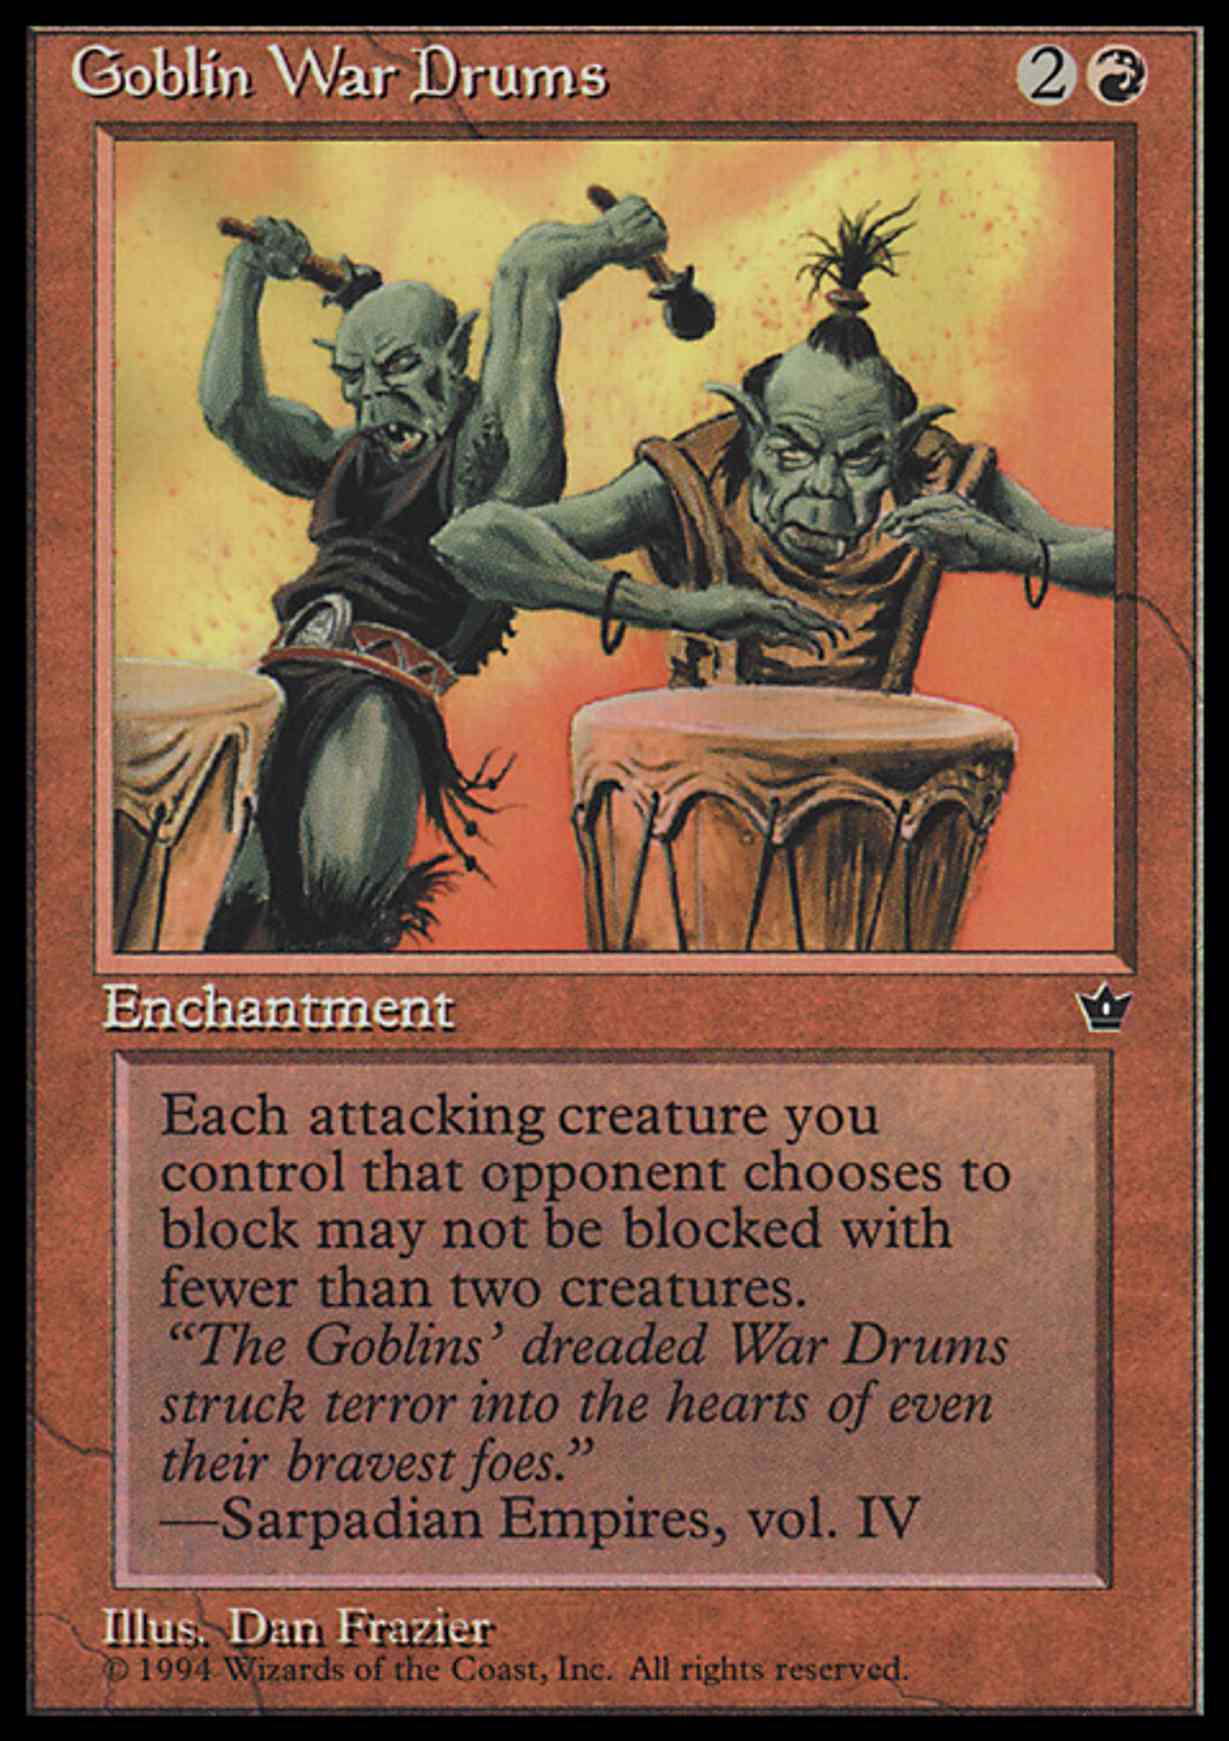 Goblin War Drums (Frazier) magic card front